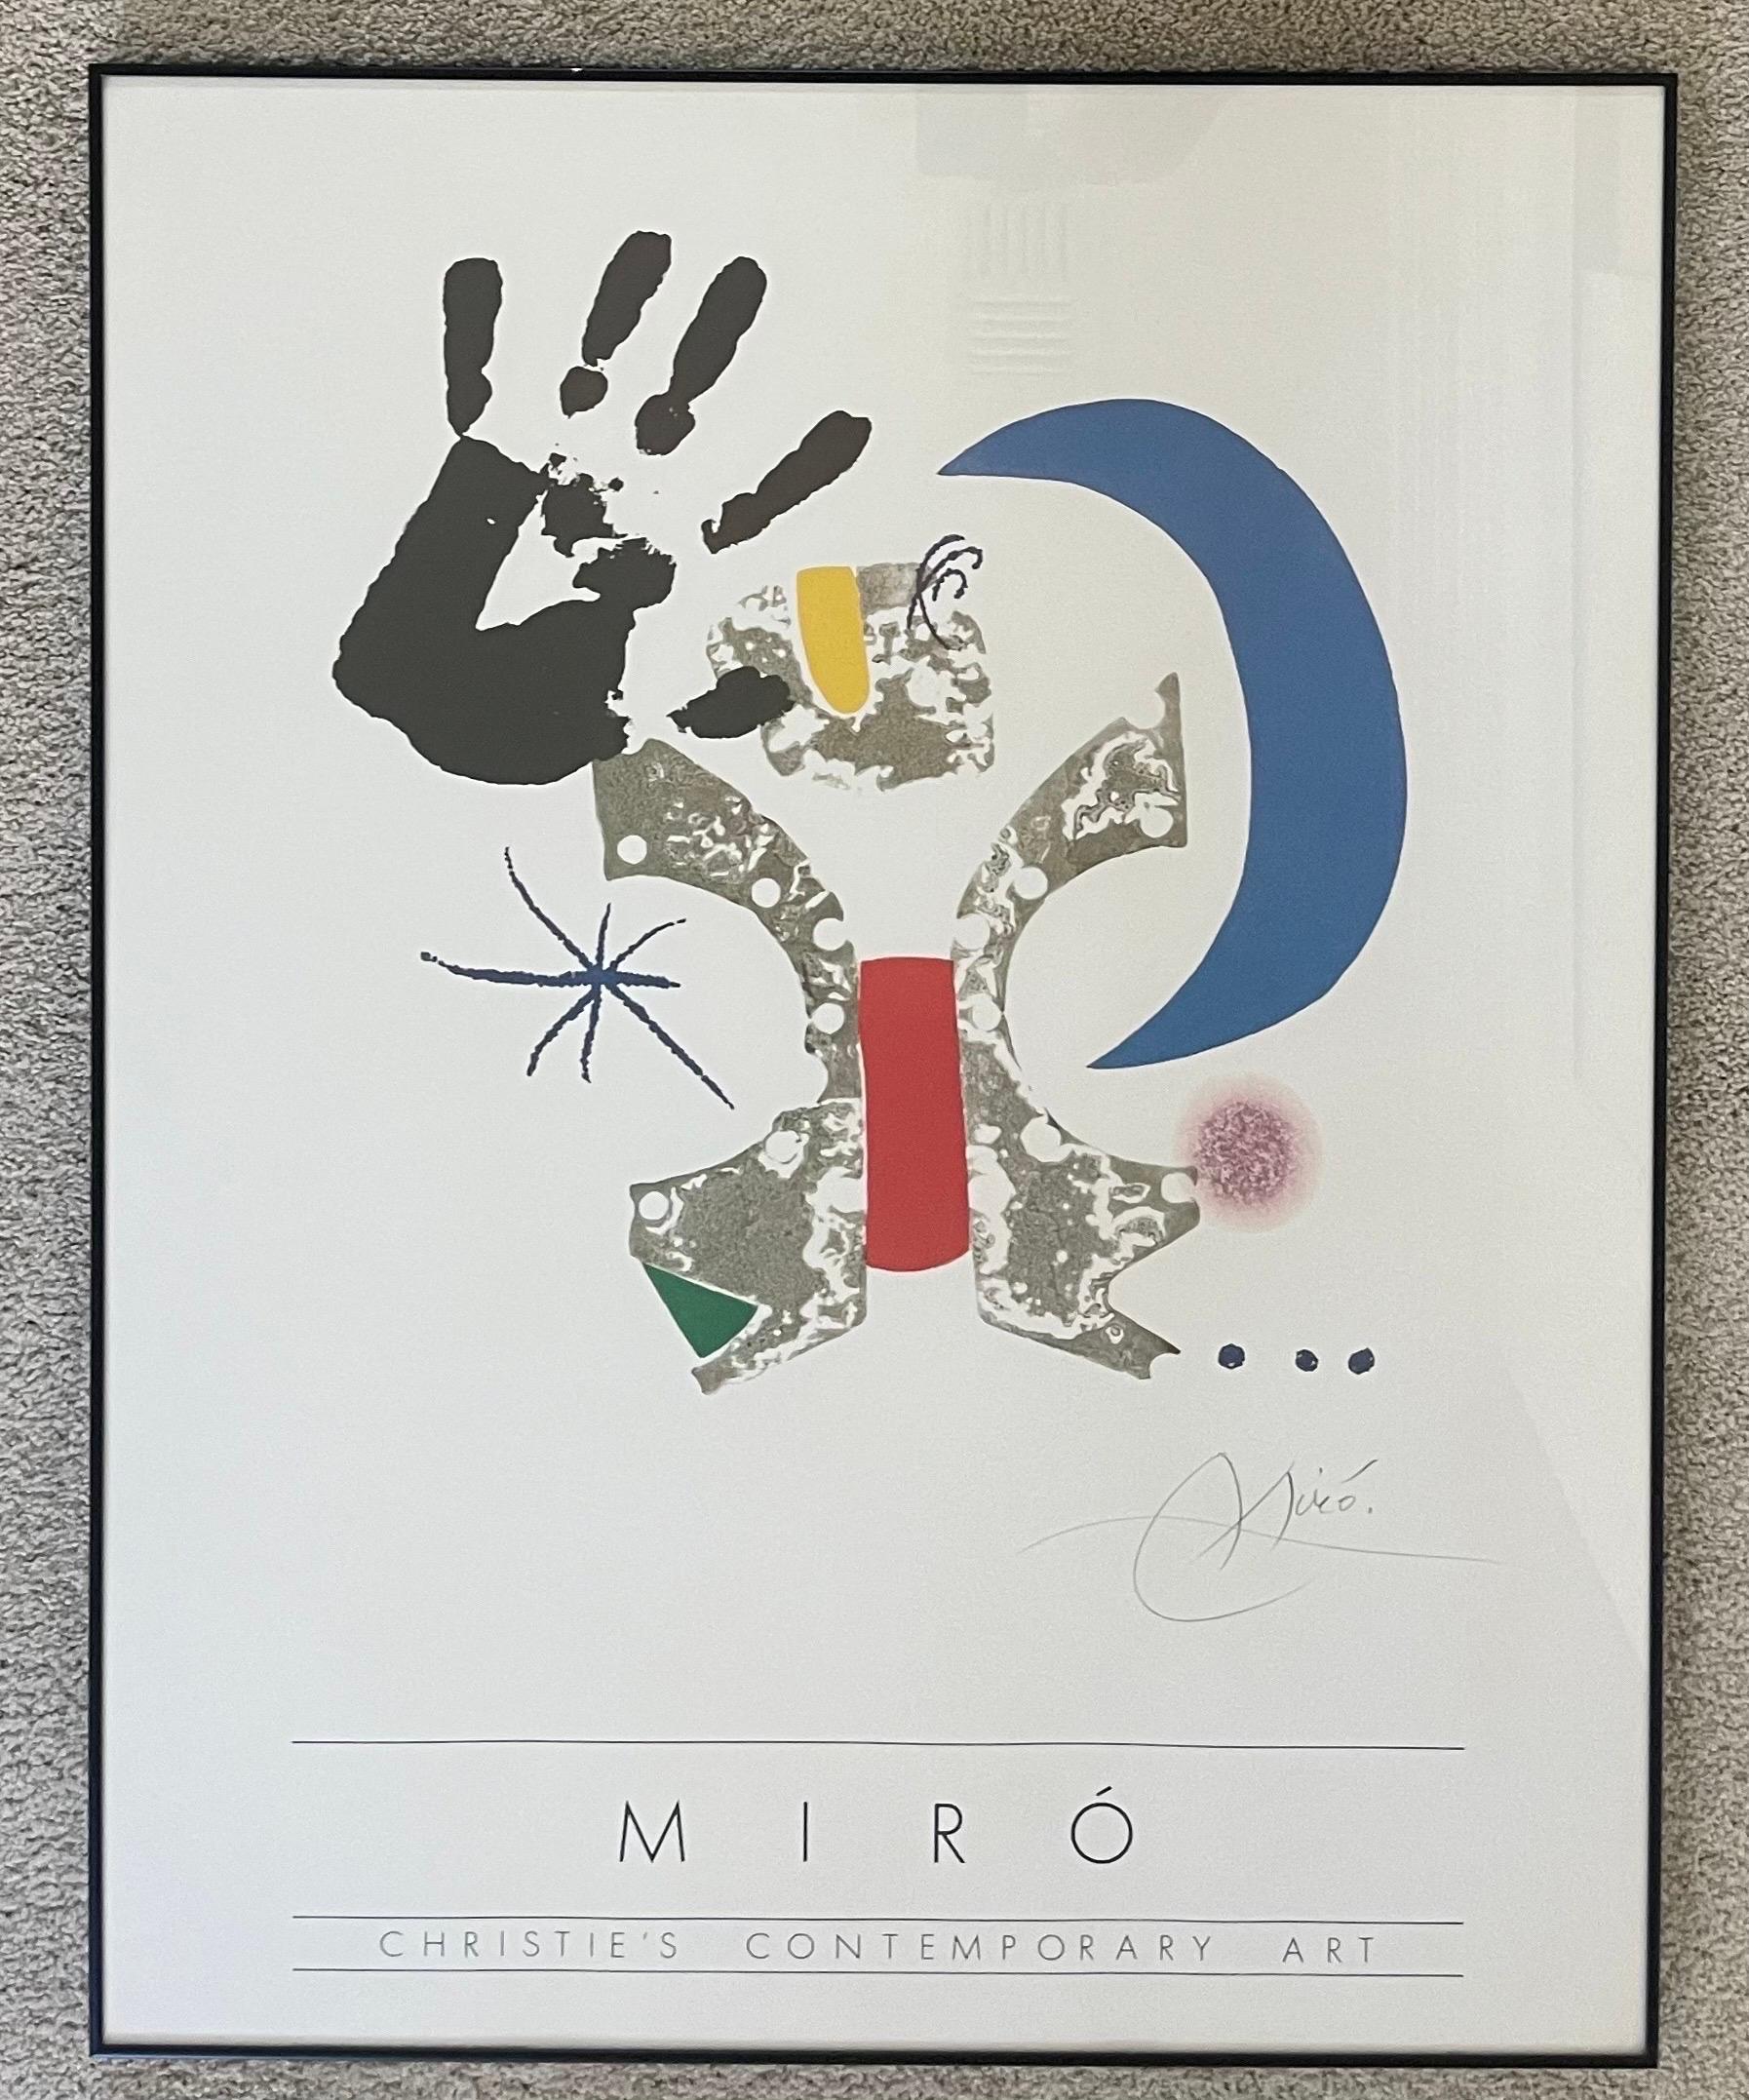 Joan Miro / Christies Contemporary Lithograph 